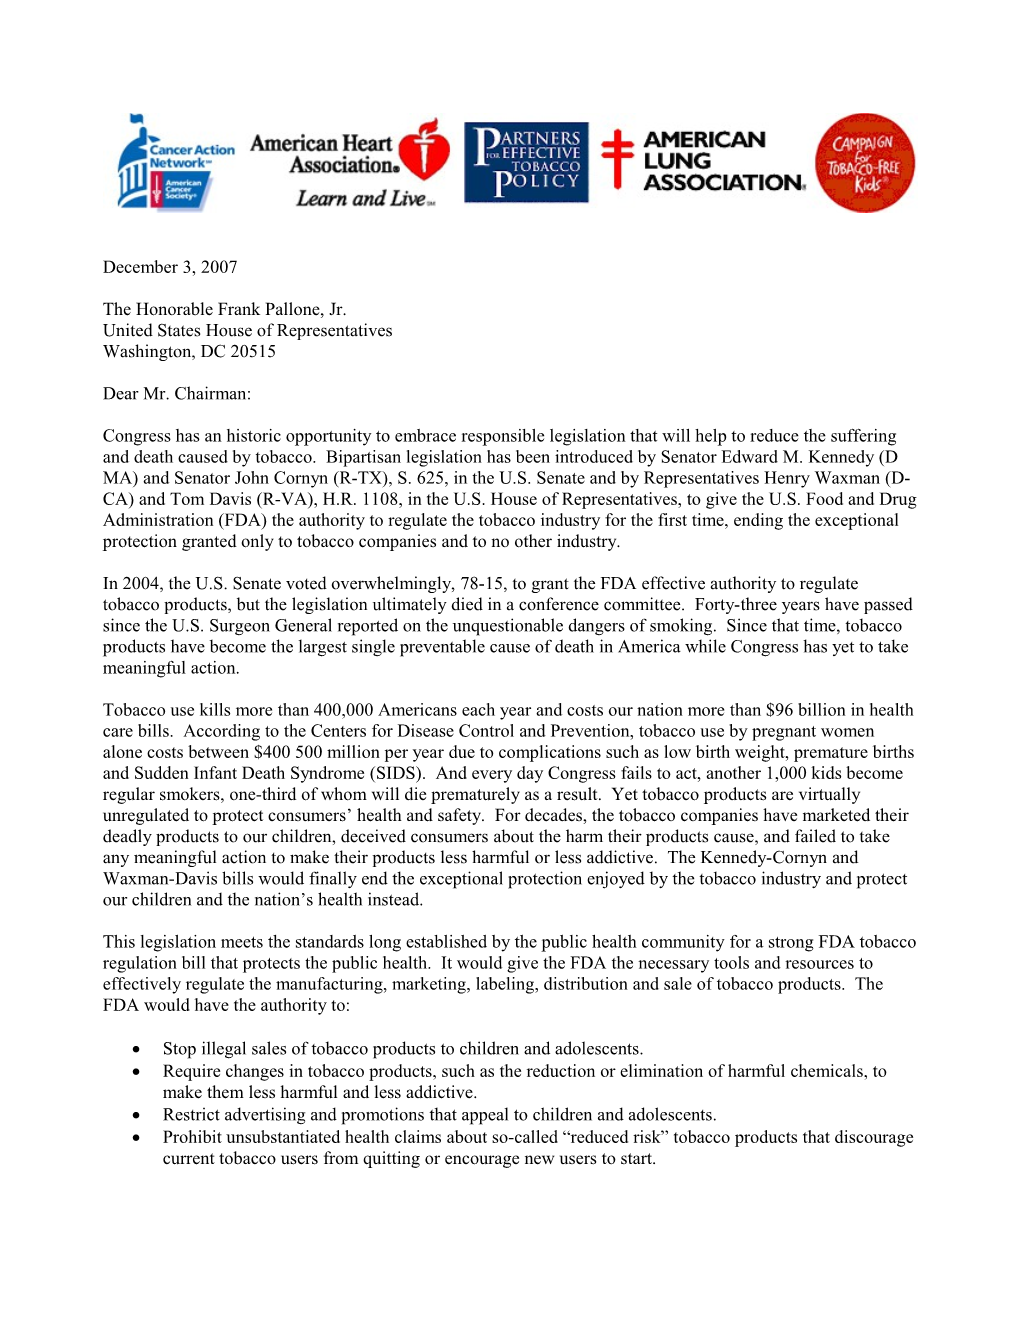 Organizations Supporting the FDA Tobacco Legislation, Page 1 of 9